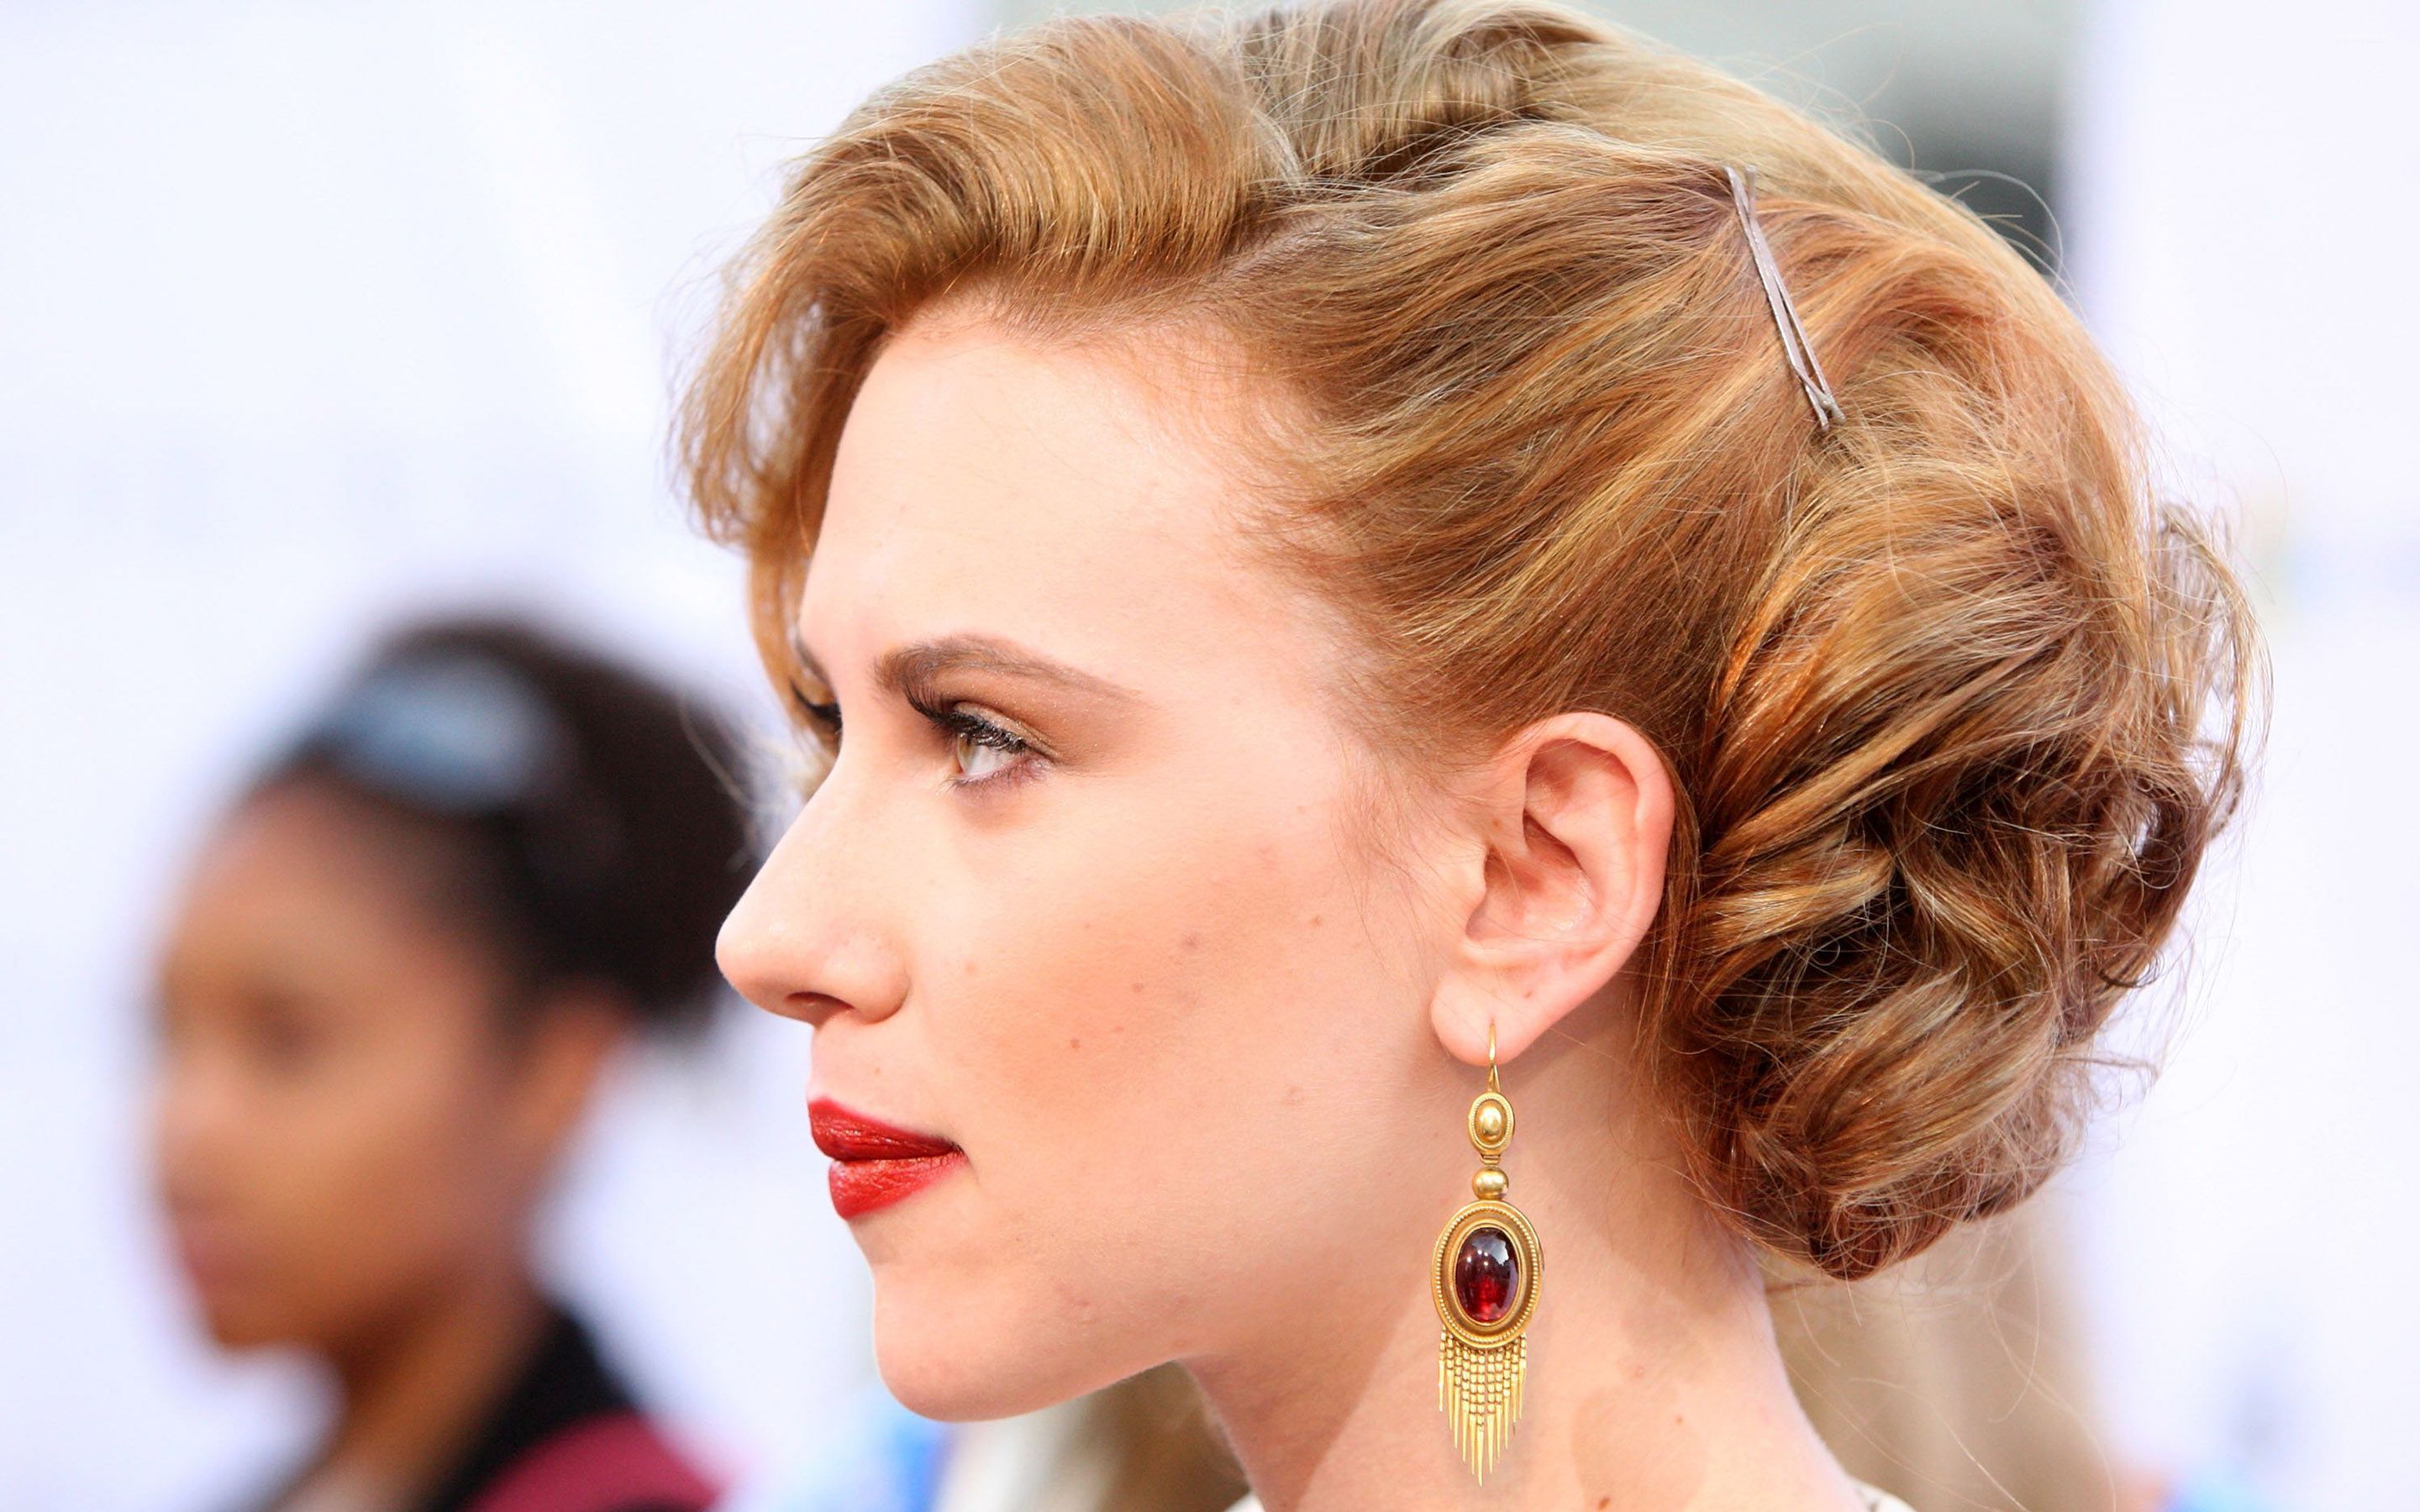 Scarlett Johansson with golden earrings wallpaper - Celebrity wallpapers - ...